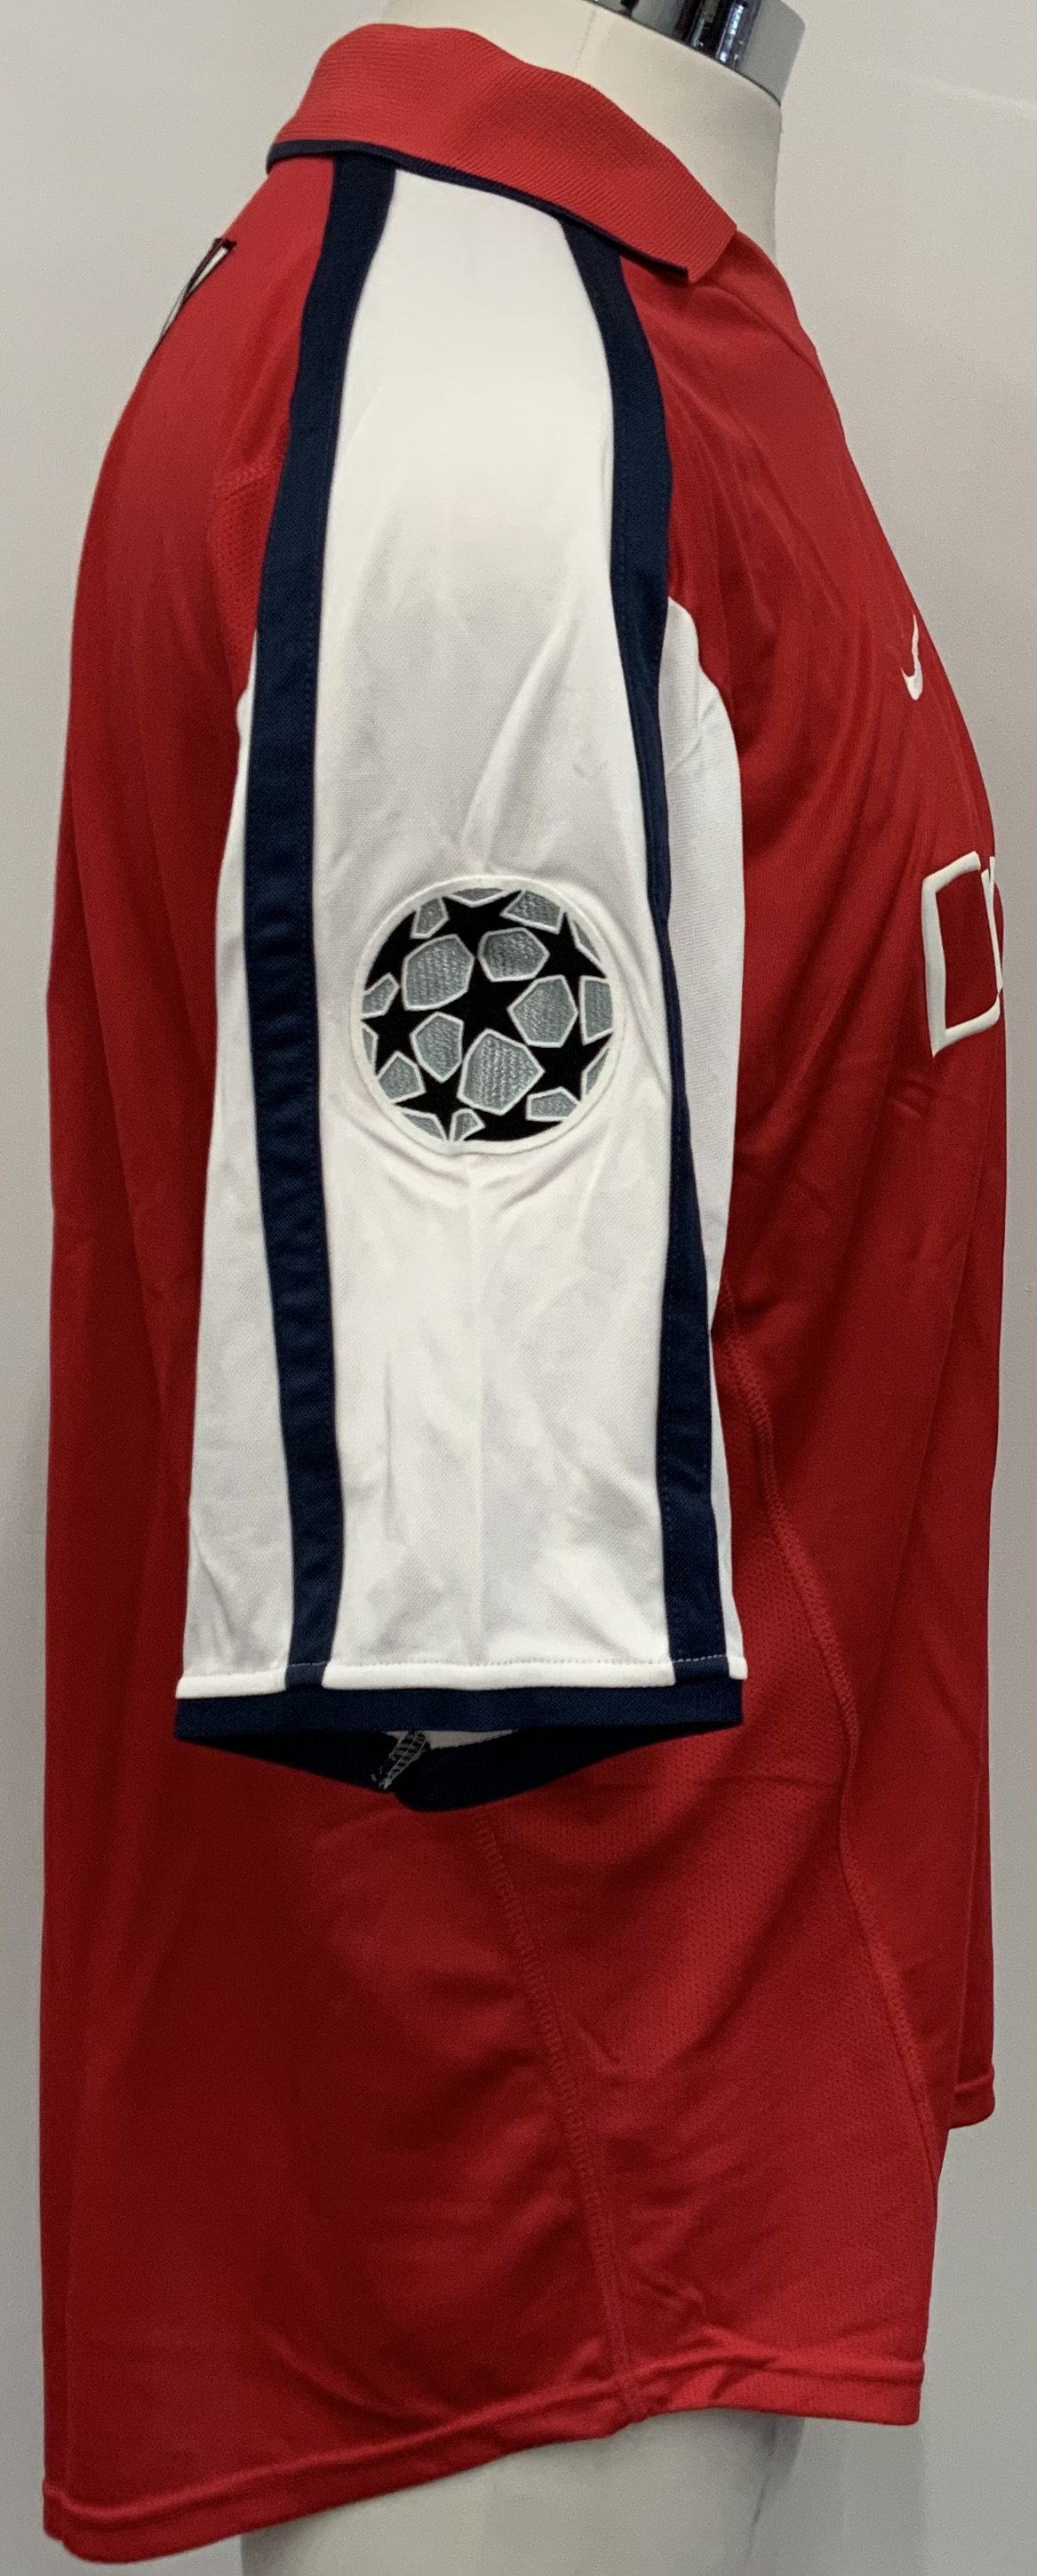 Henry Arsenal 2000 - 2001 Match Worn Football Shir - Image 3 of 4